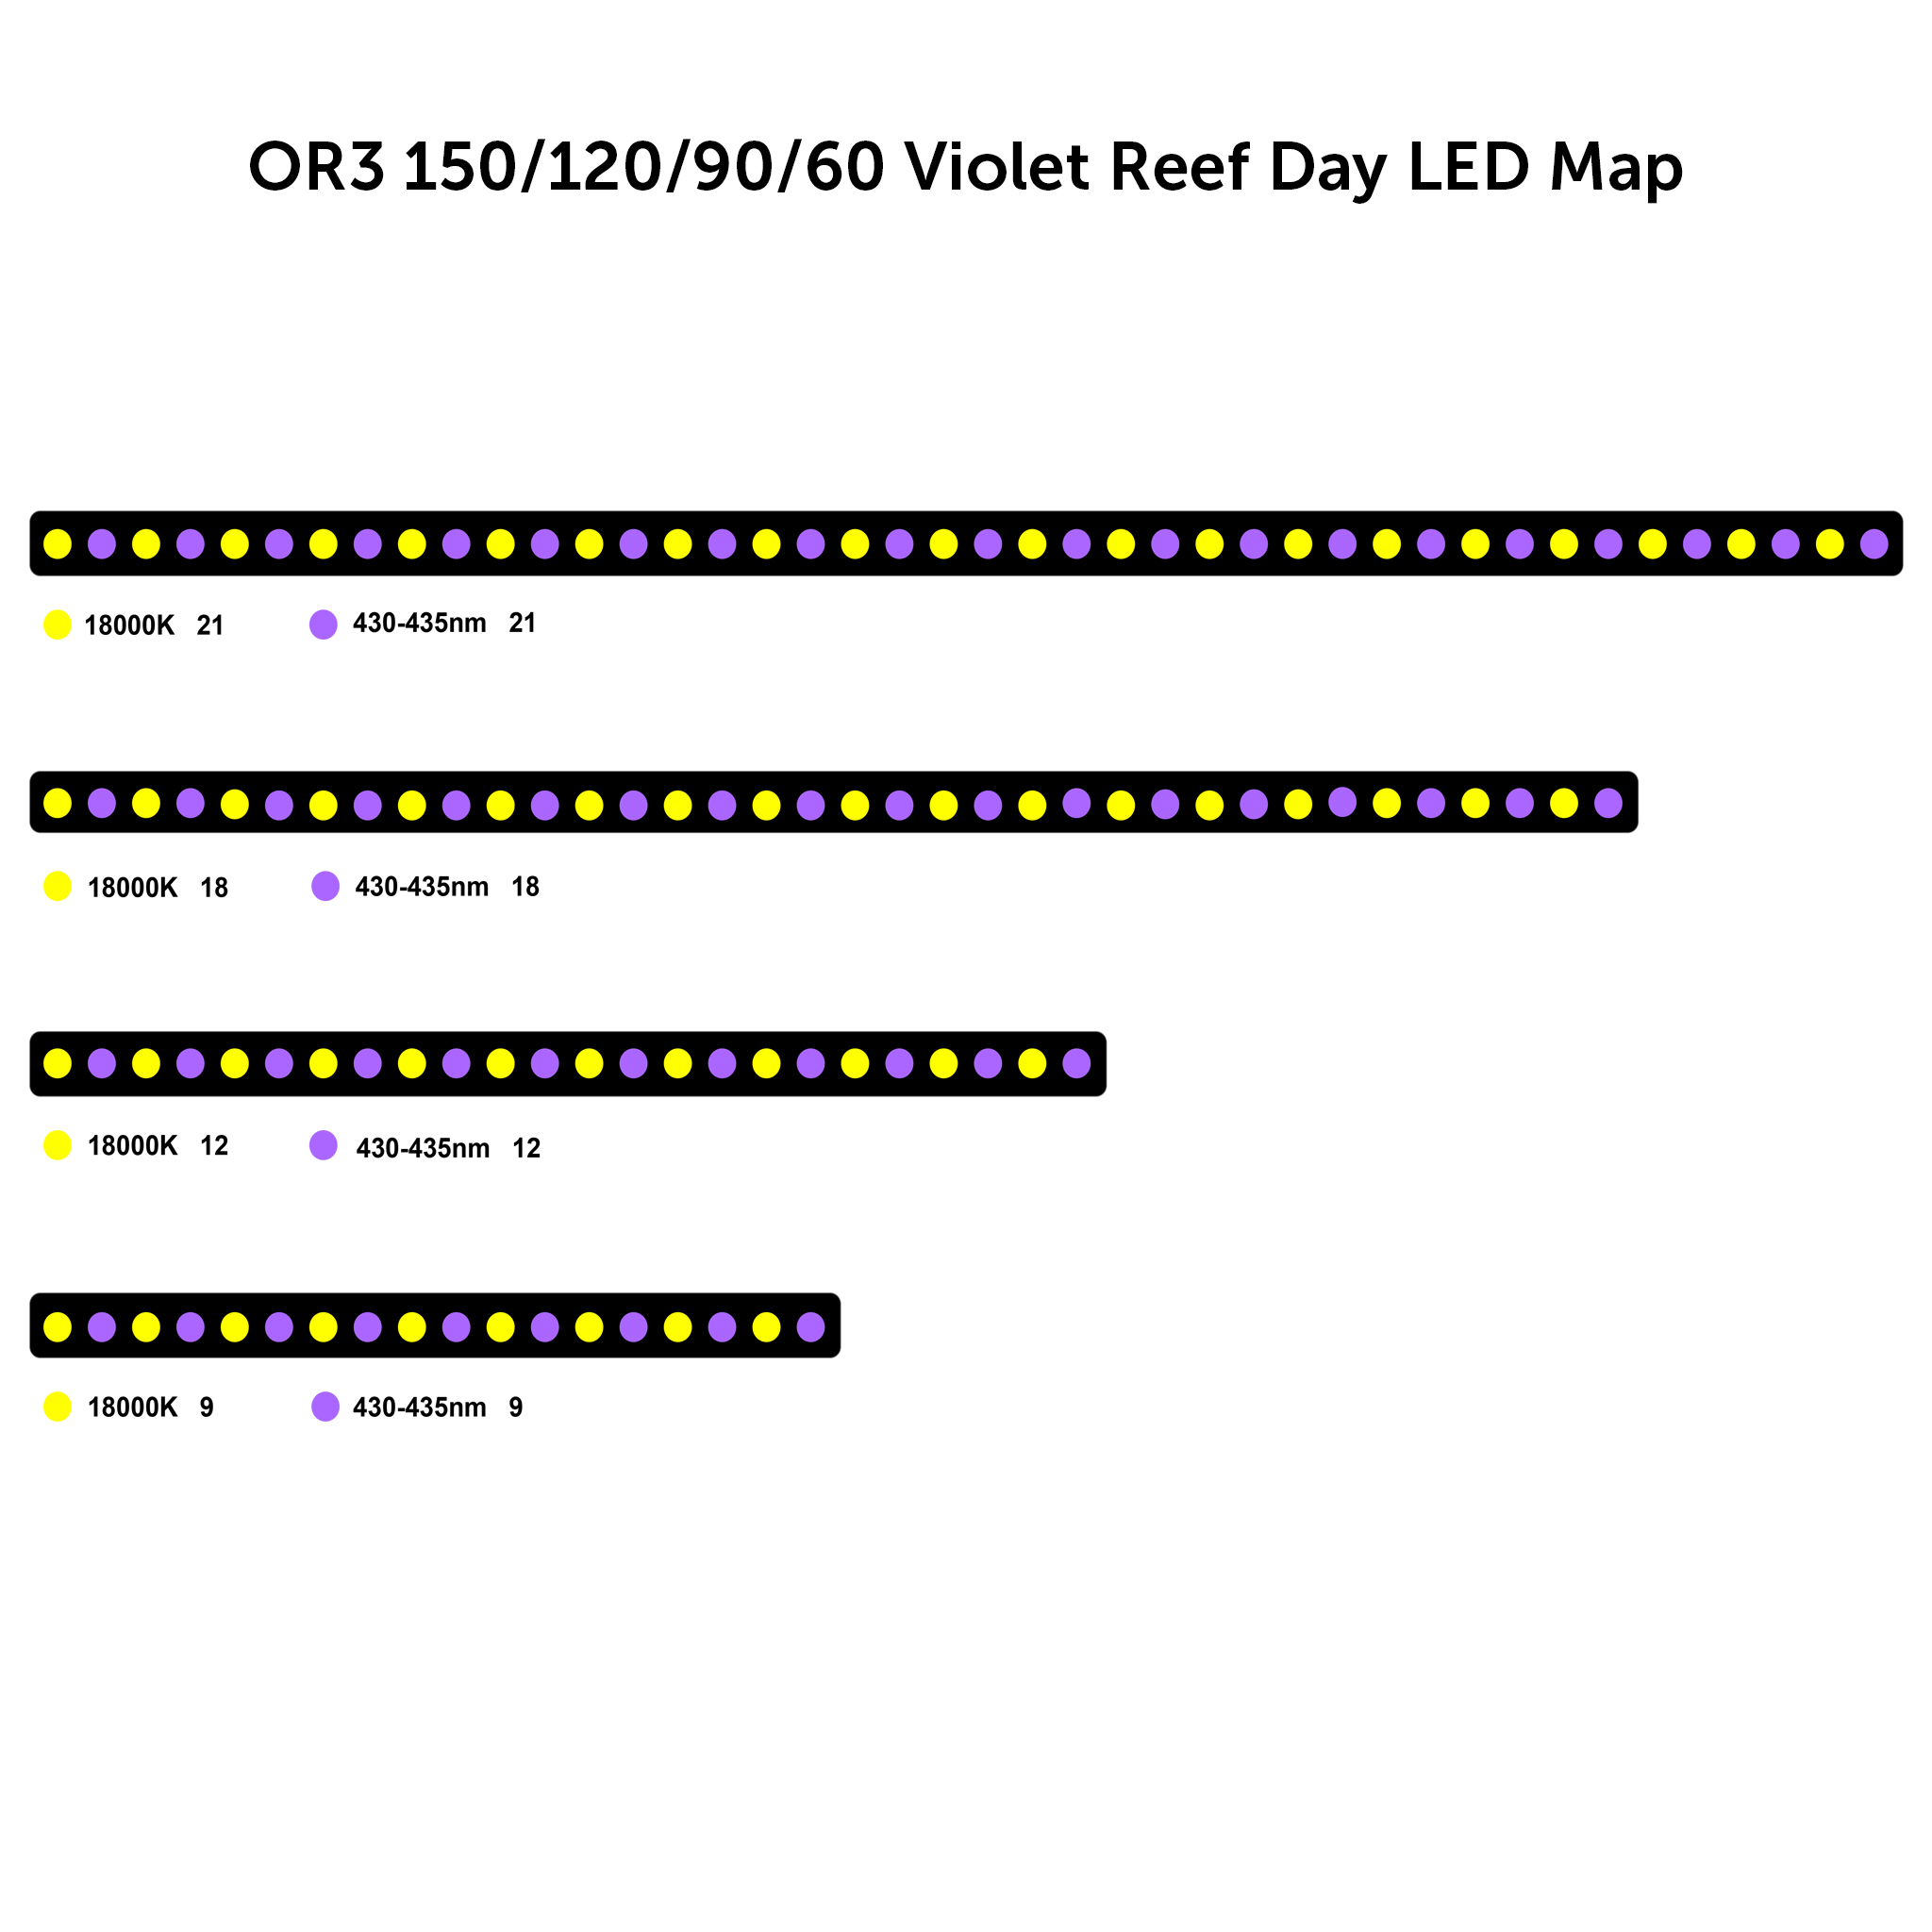 Mapa LED de día de arrecife violeta OR3